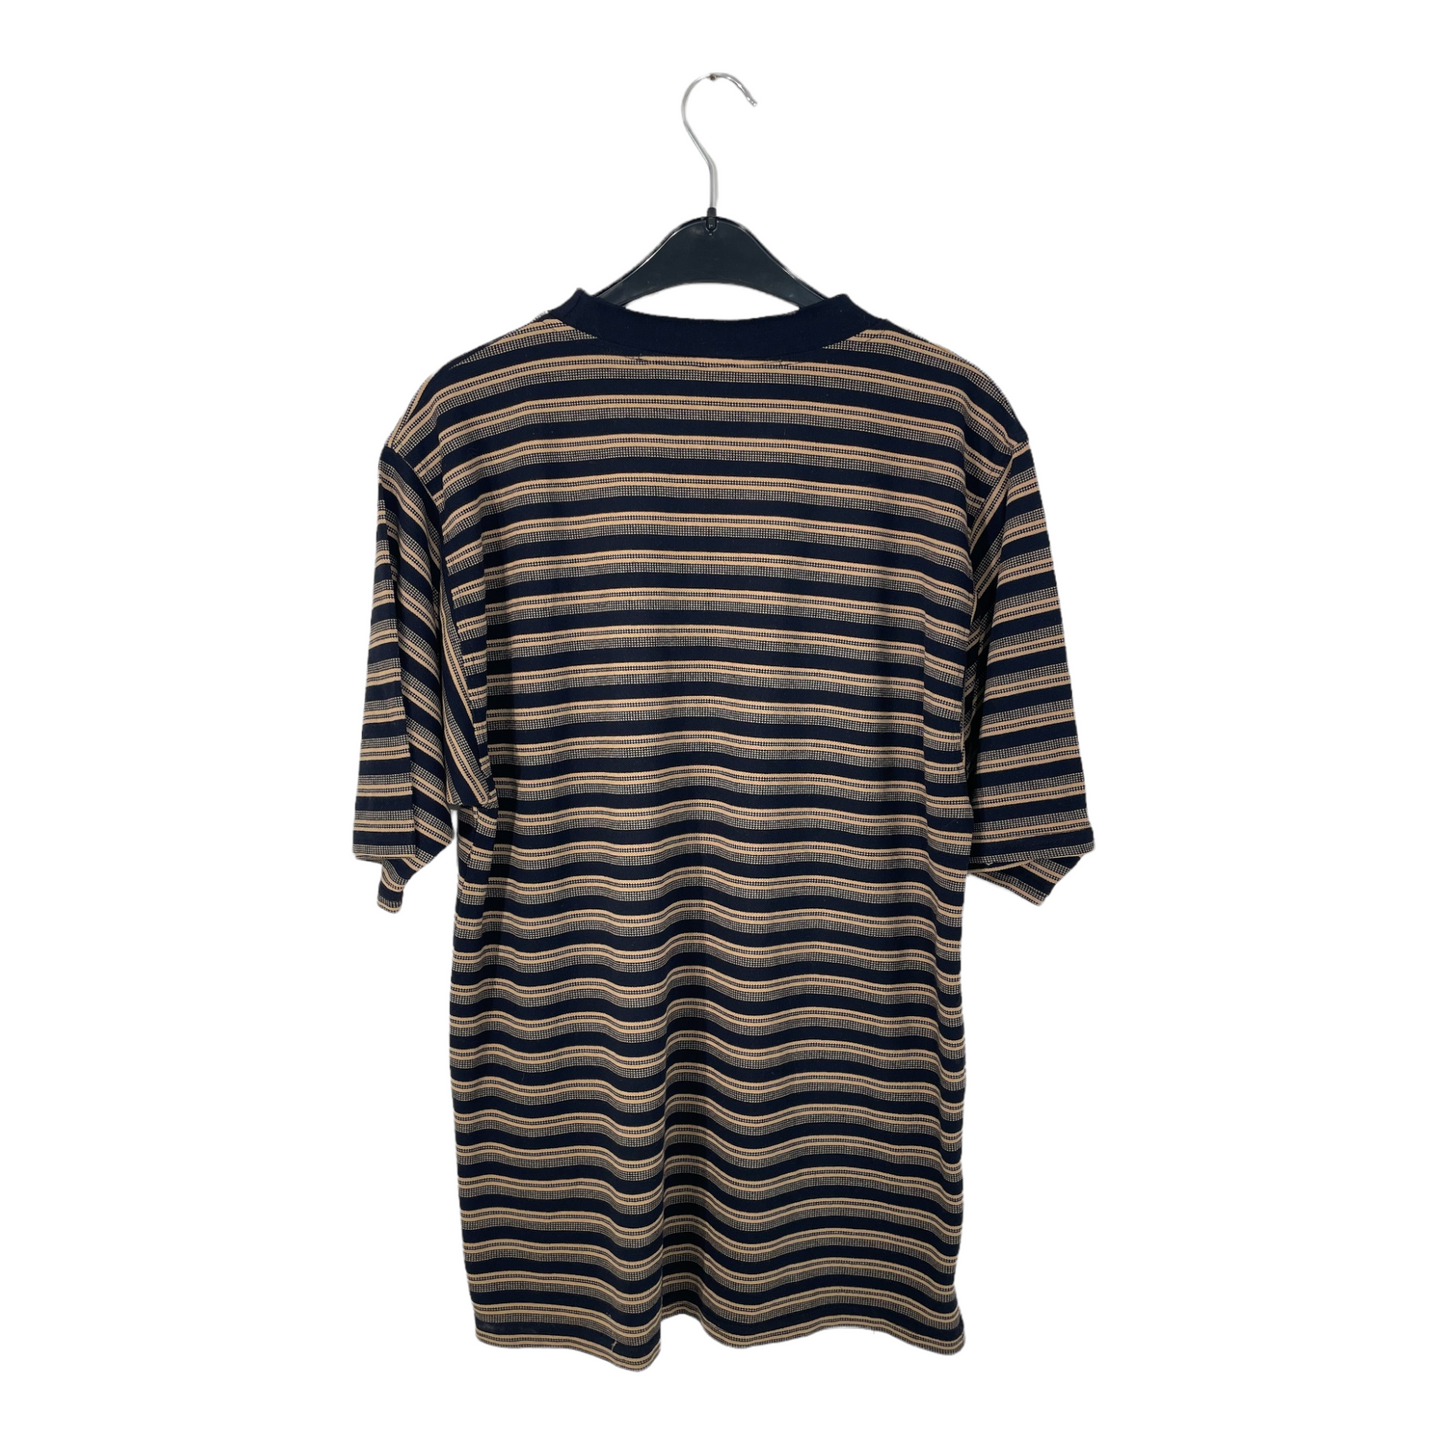 Adidas Striped T-Shirt